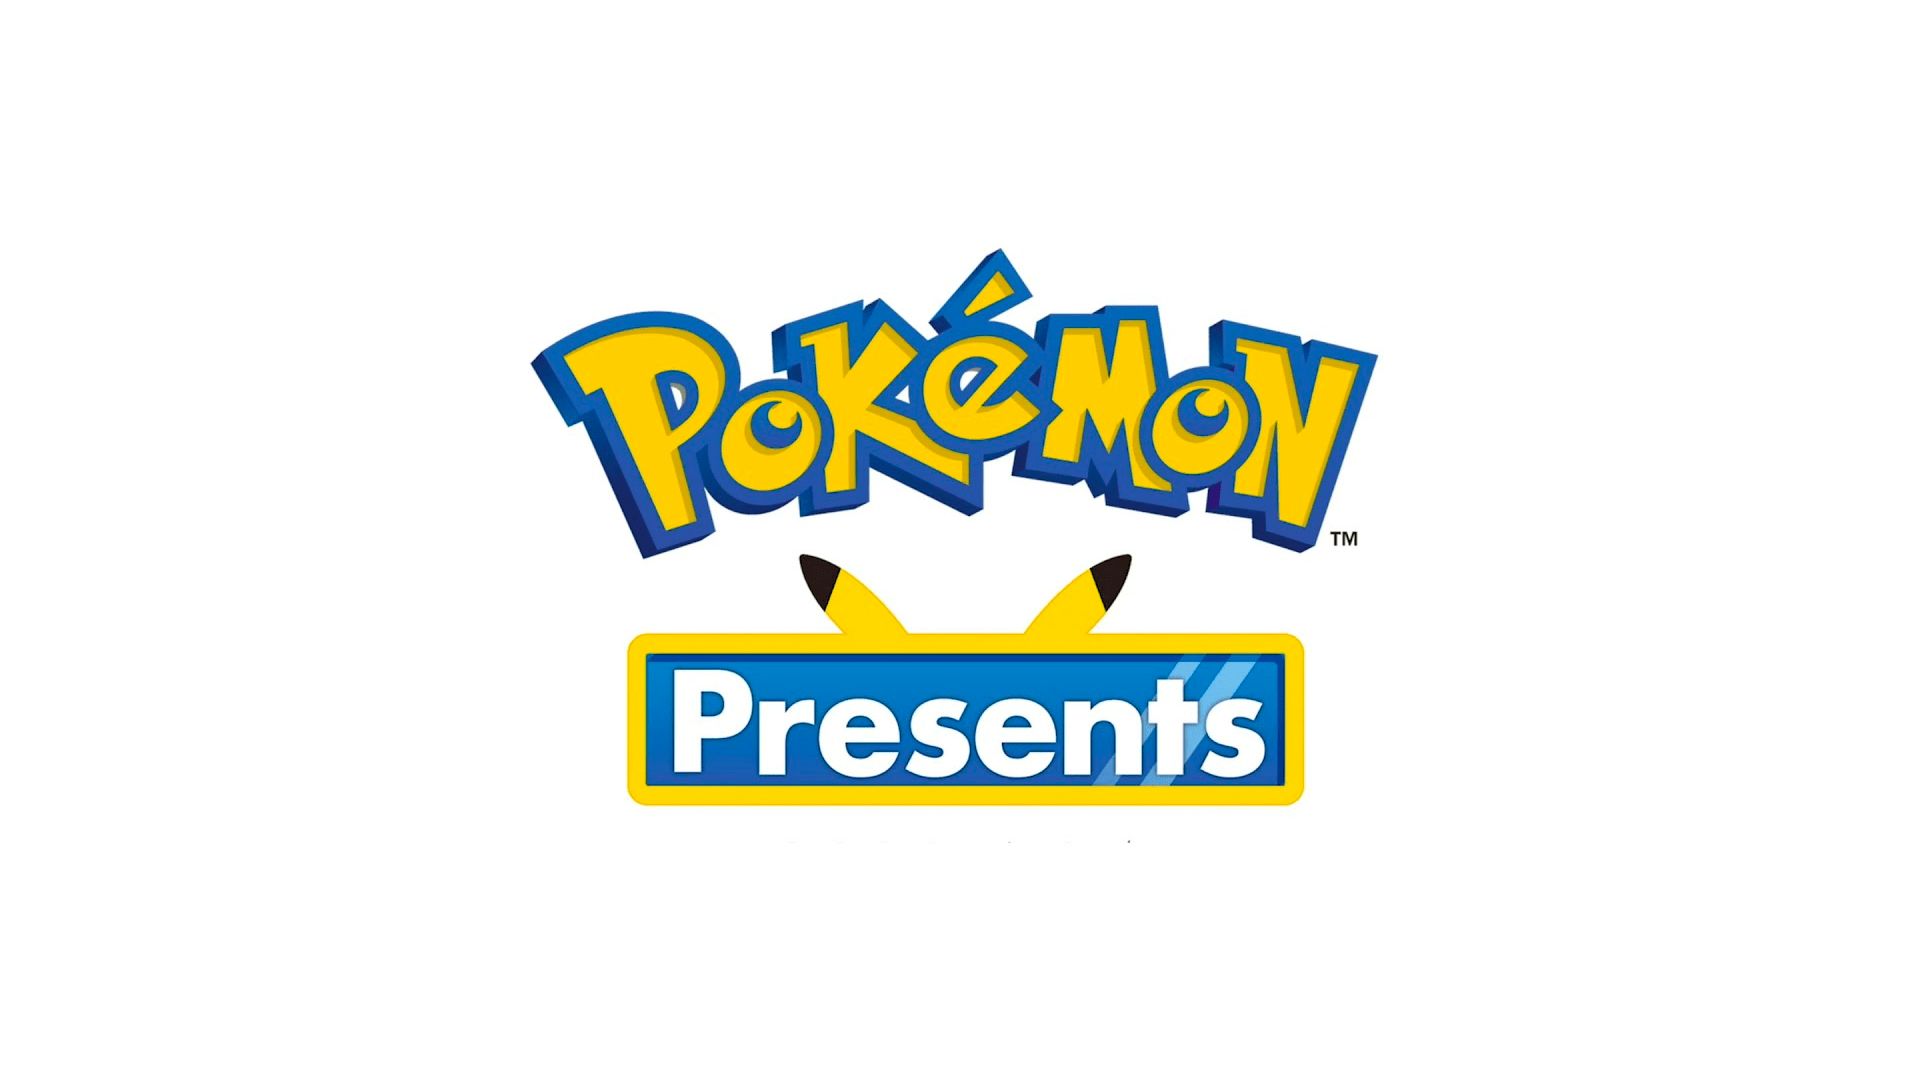 Pokemon Presents Announced for February 27